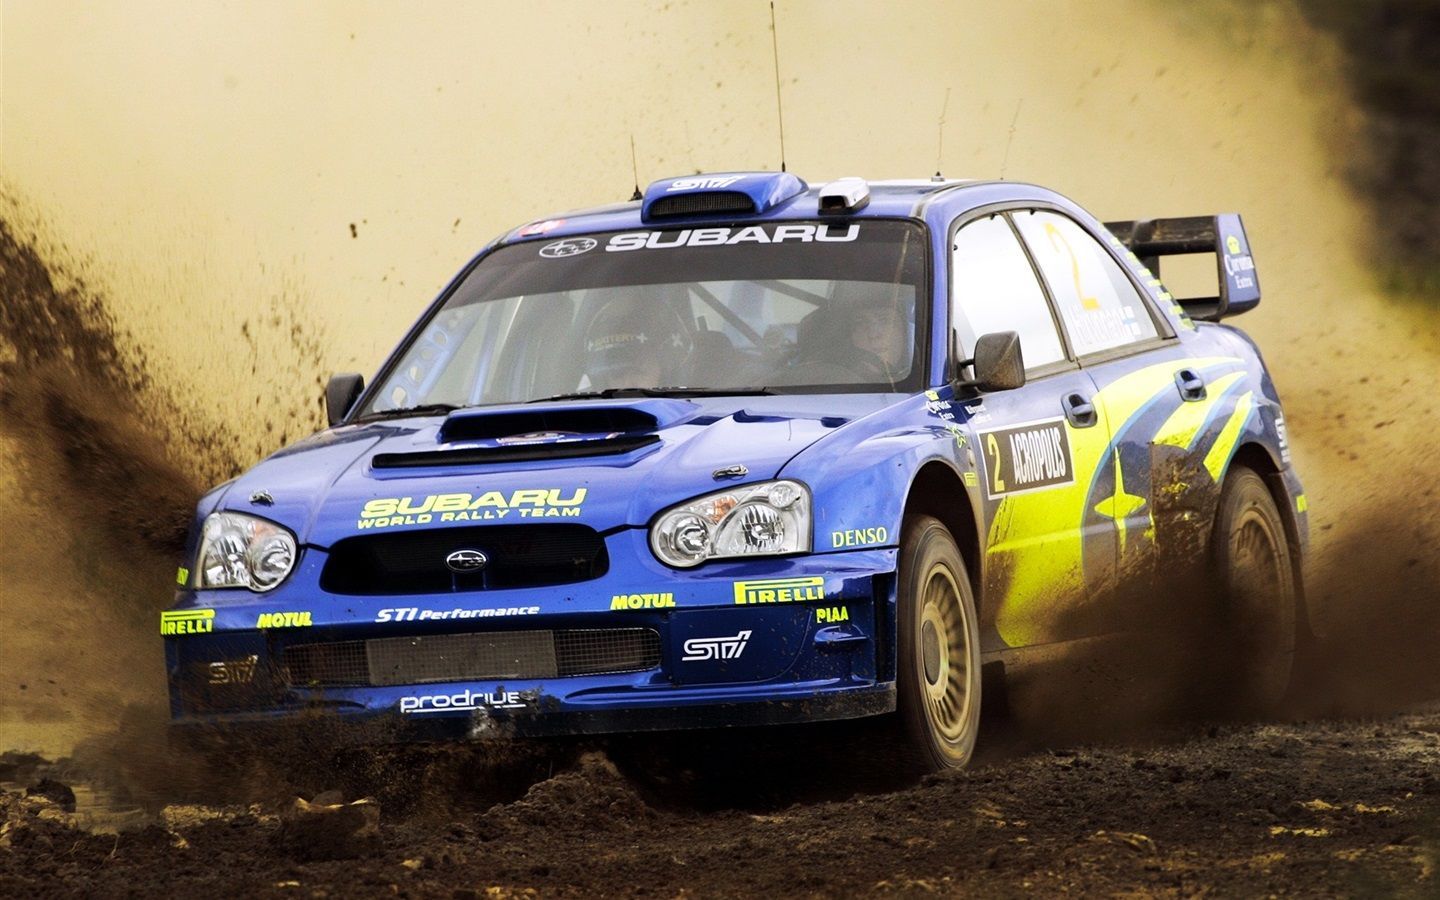 Dirt Rally Wallpaper Mobile. Subaru impreza wrc, Subaru impreza, Subaru wrc